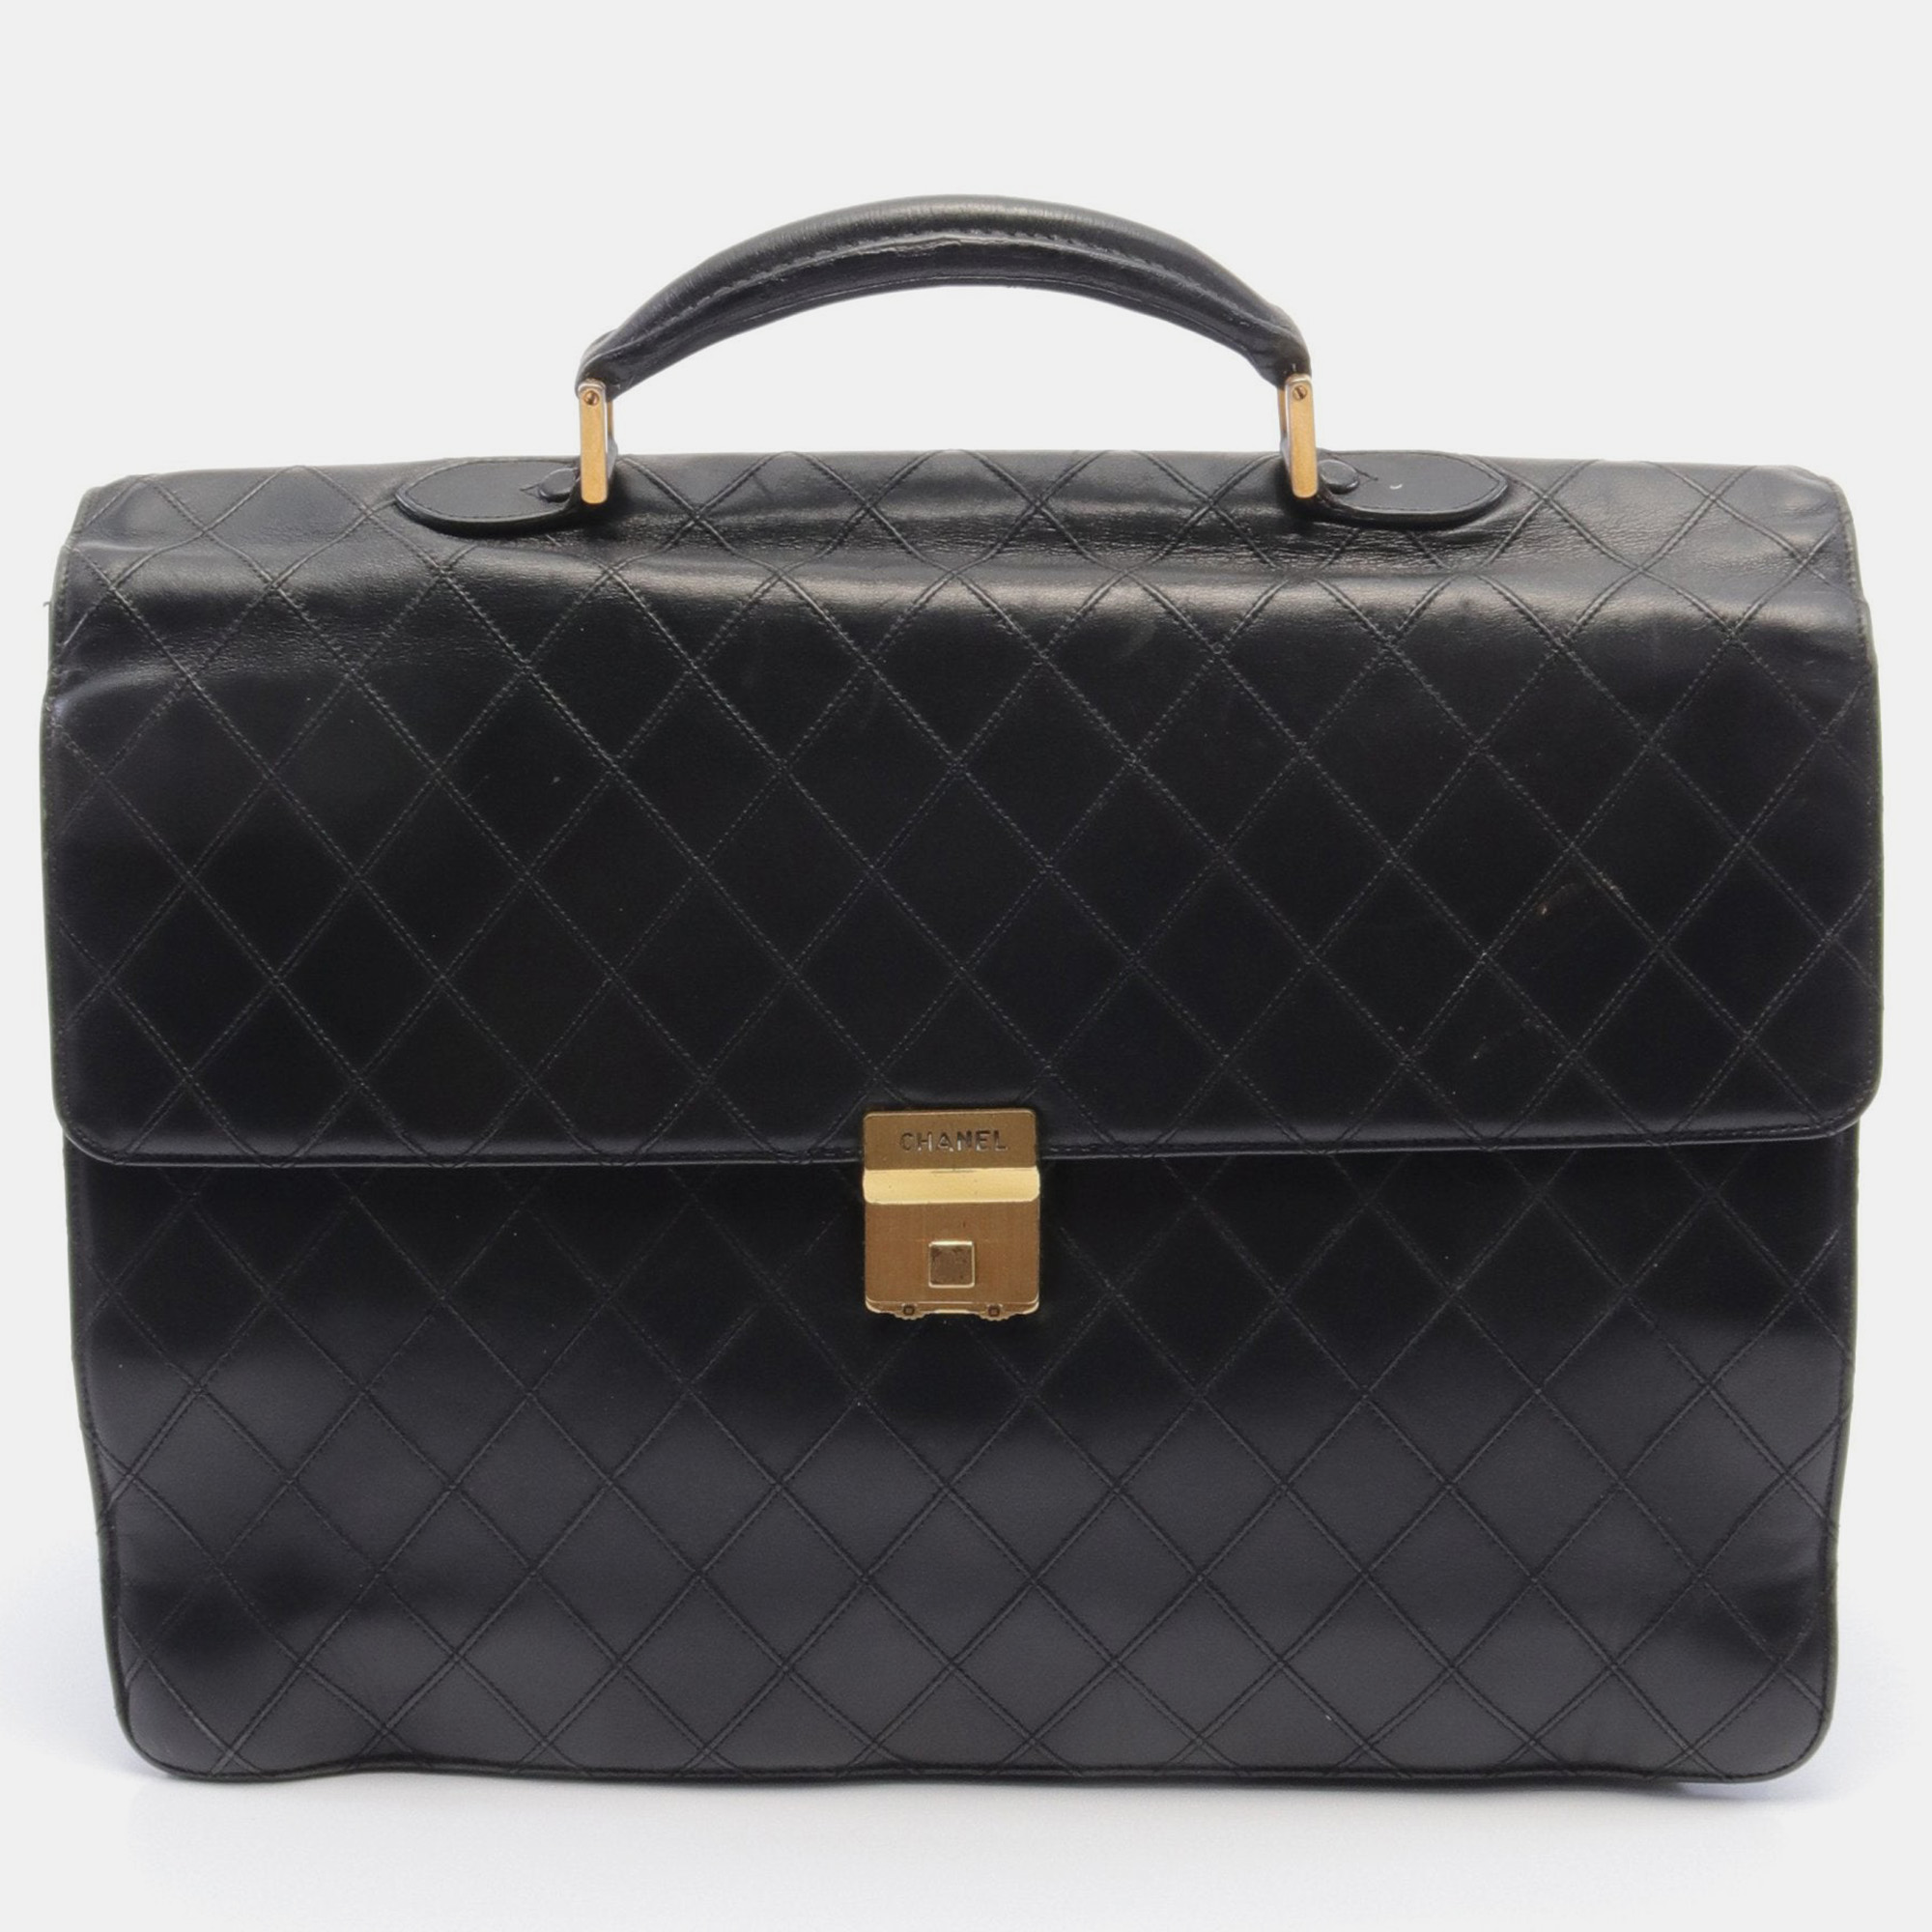 Chanel bicolore business bag lambskin black gold hardware vintage